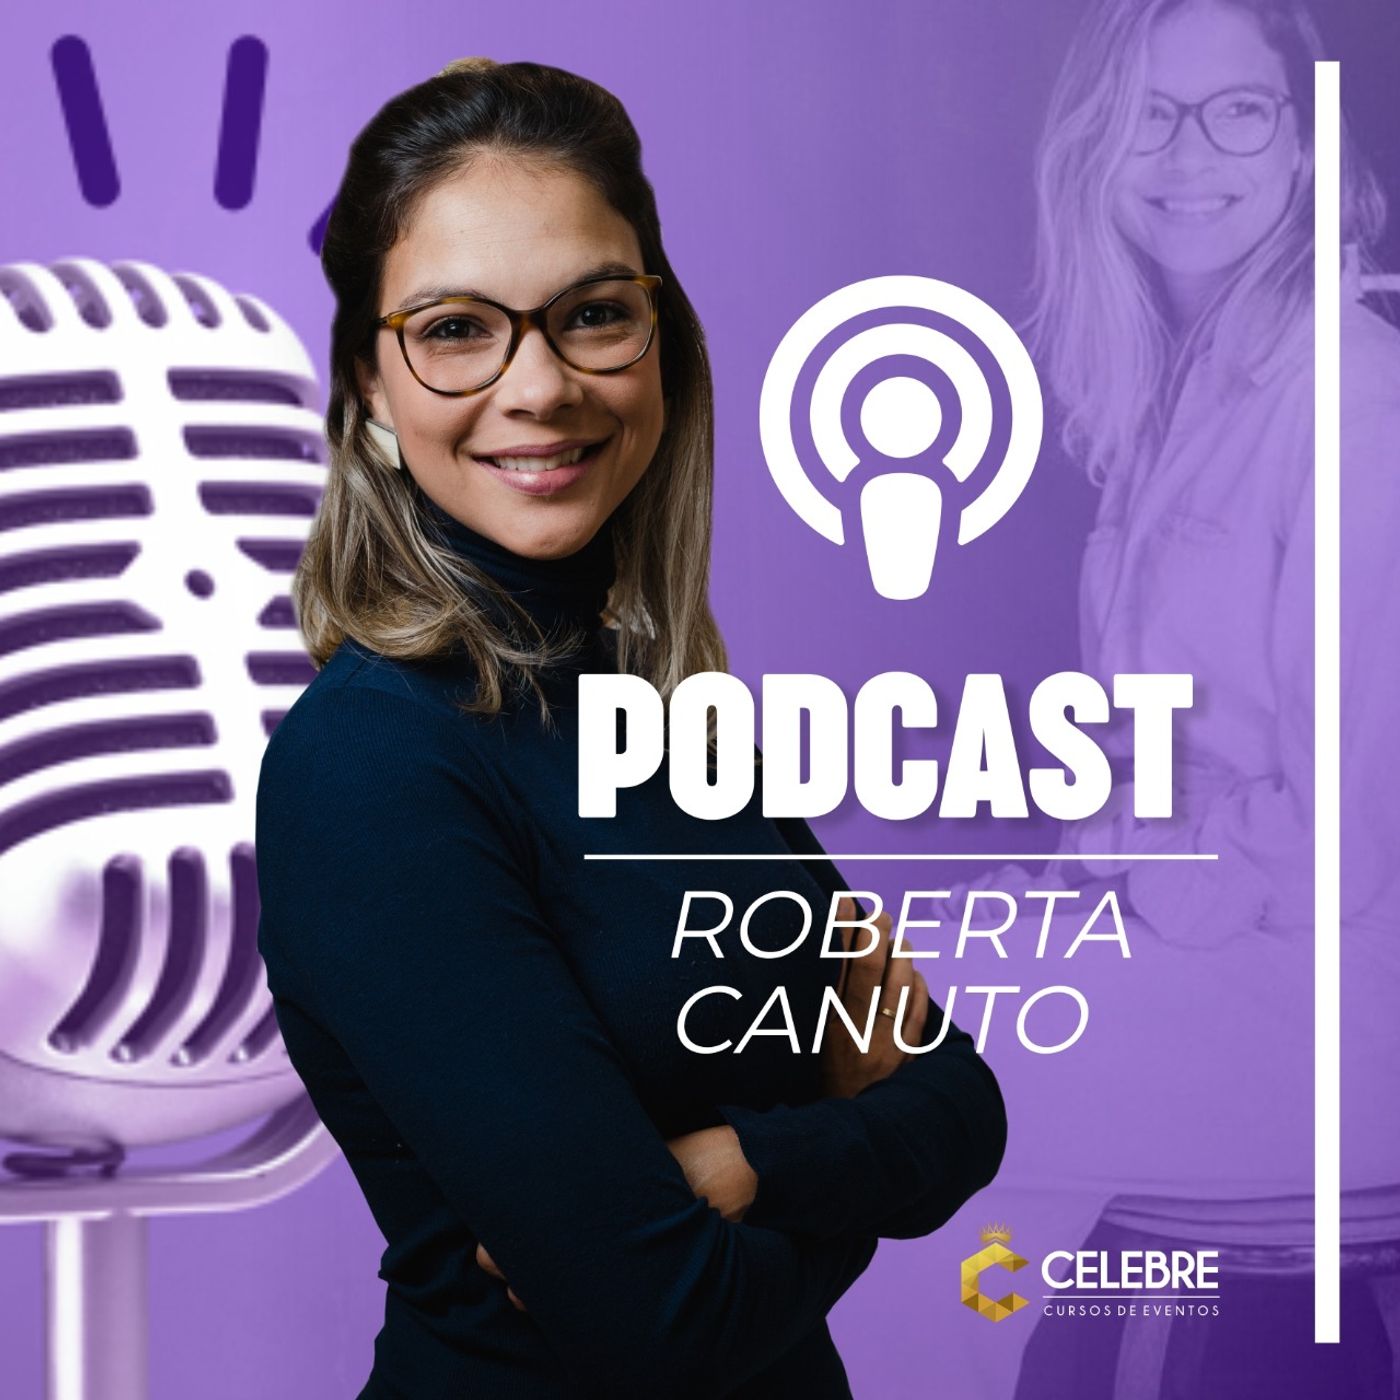 Roberta Canuto - Podcast Celebre